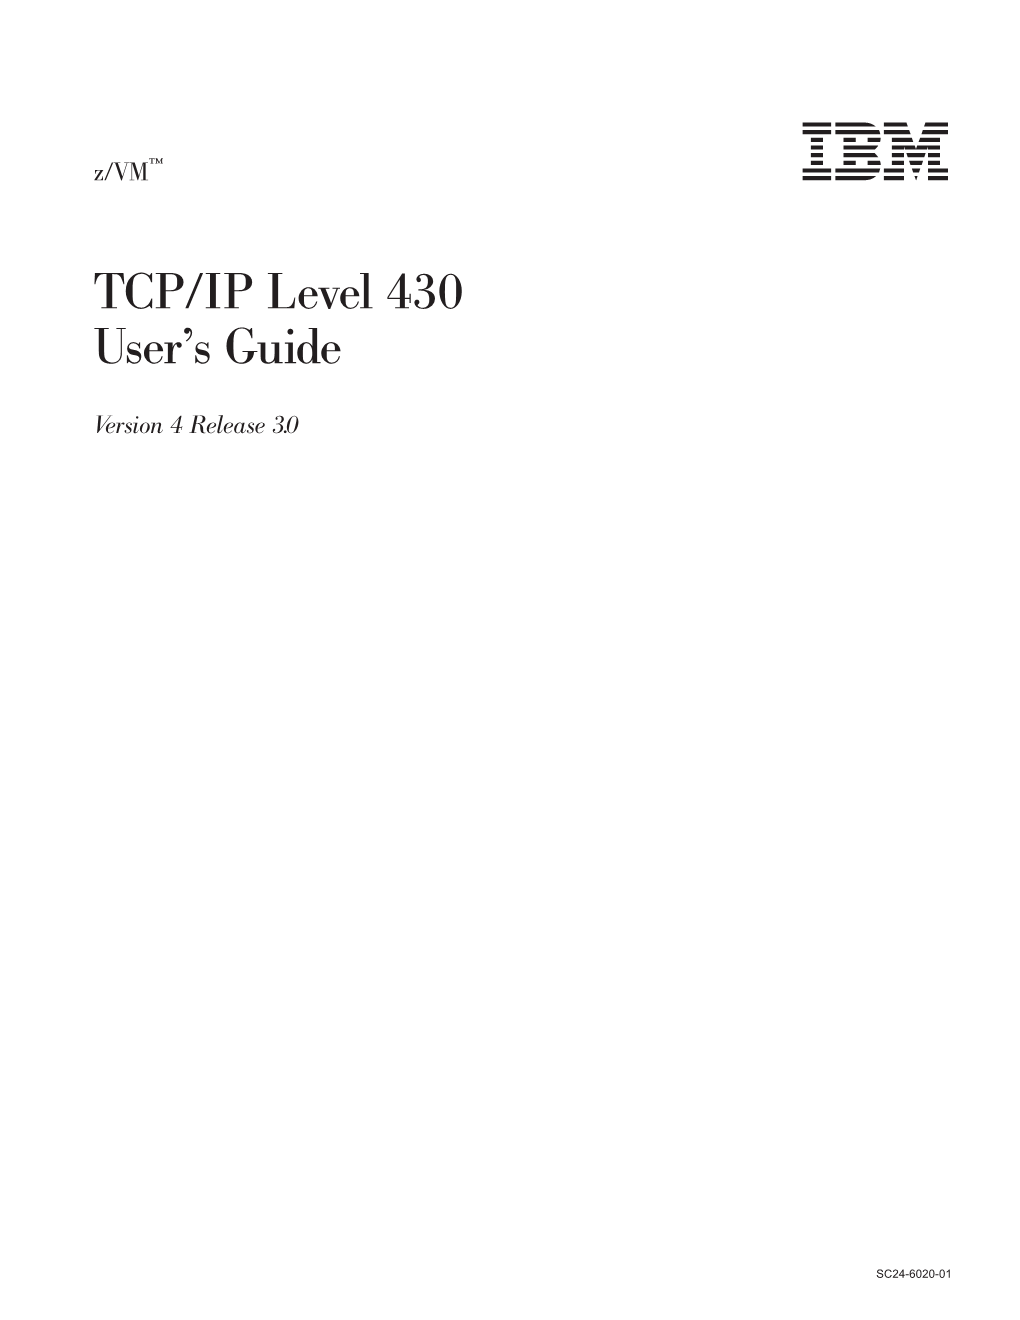 Z/VM: TCP/IP User's Guide